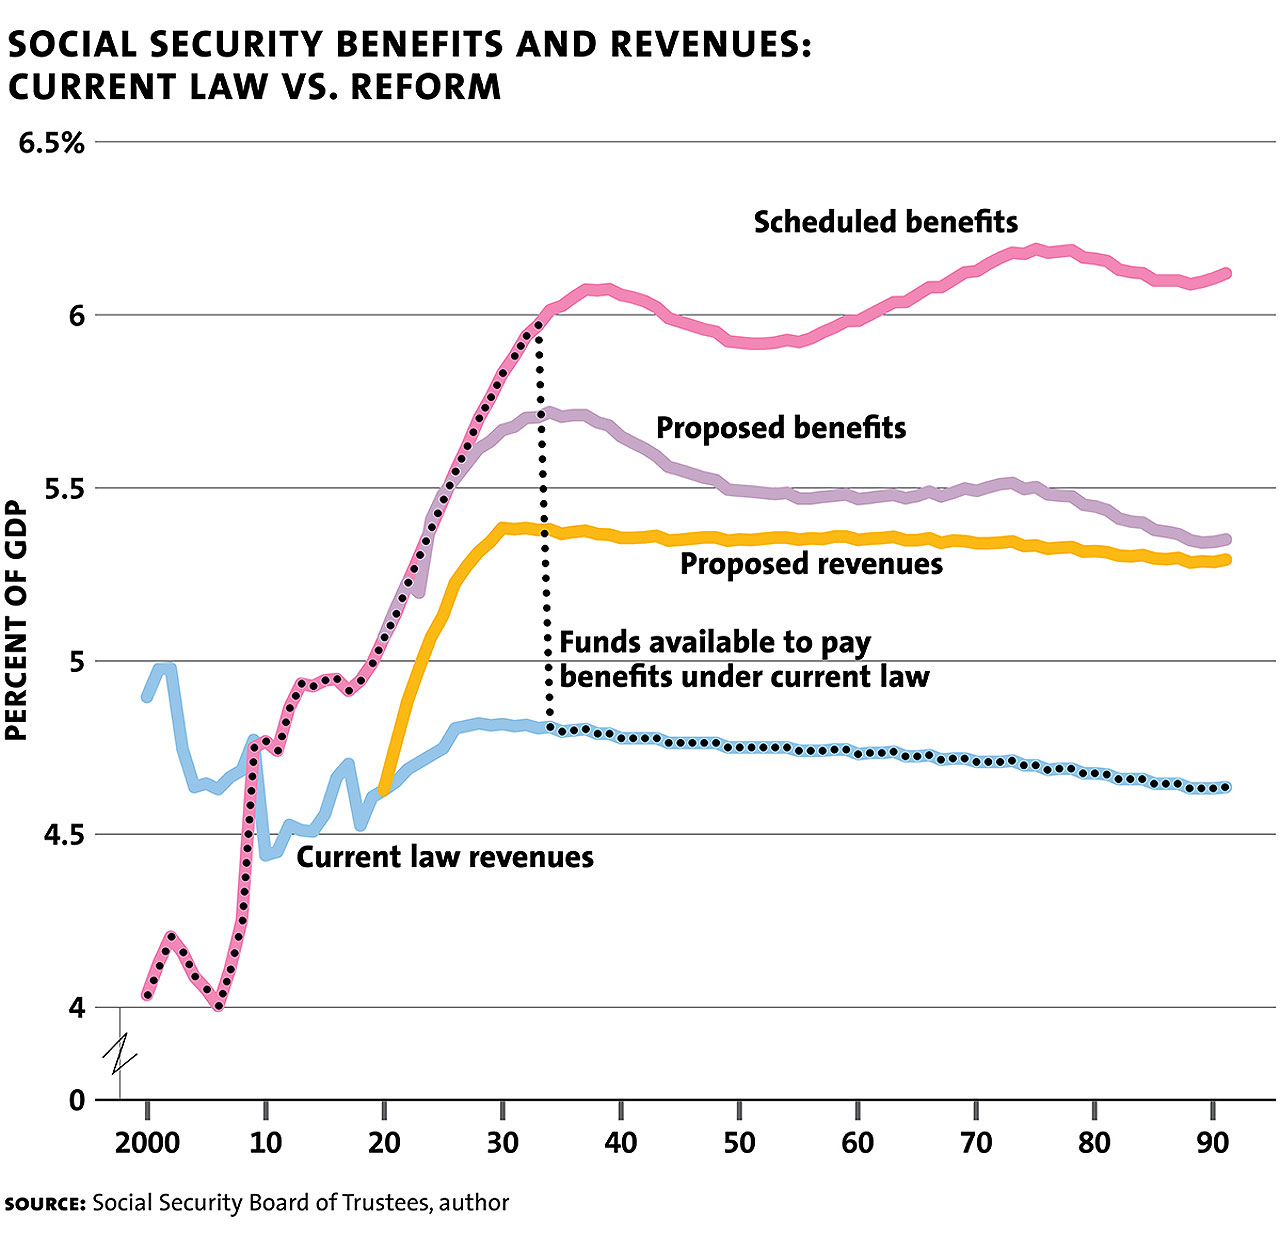 Social Security Taxation Chart